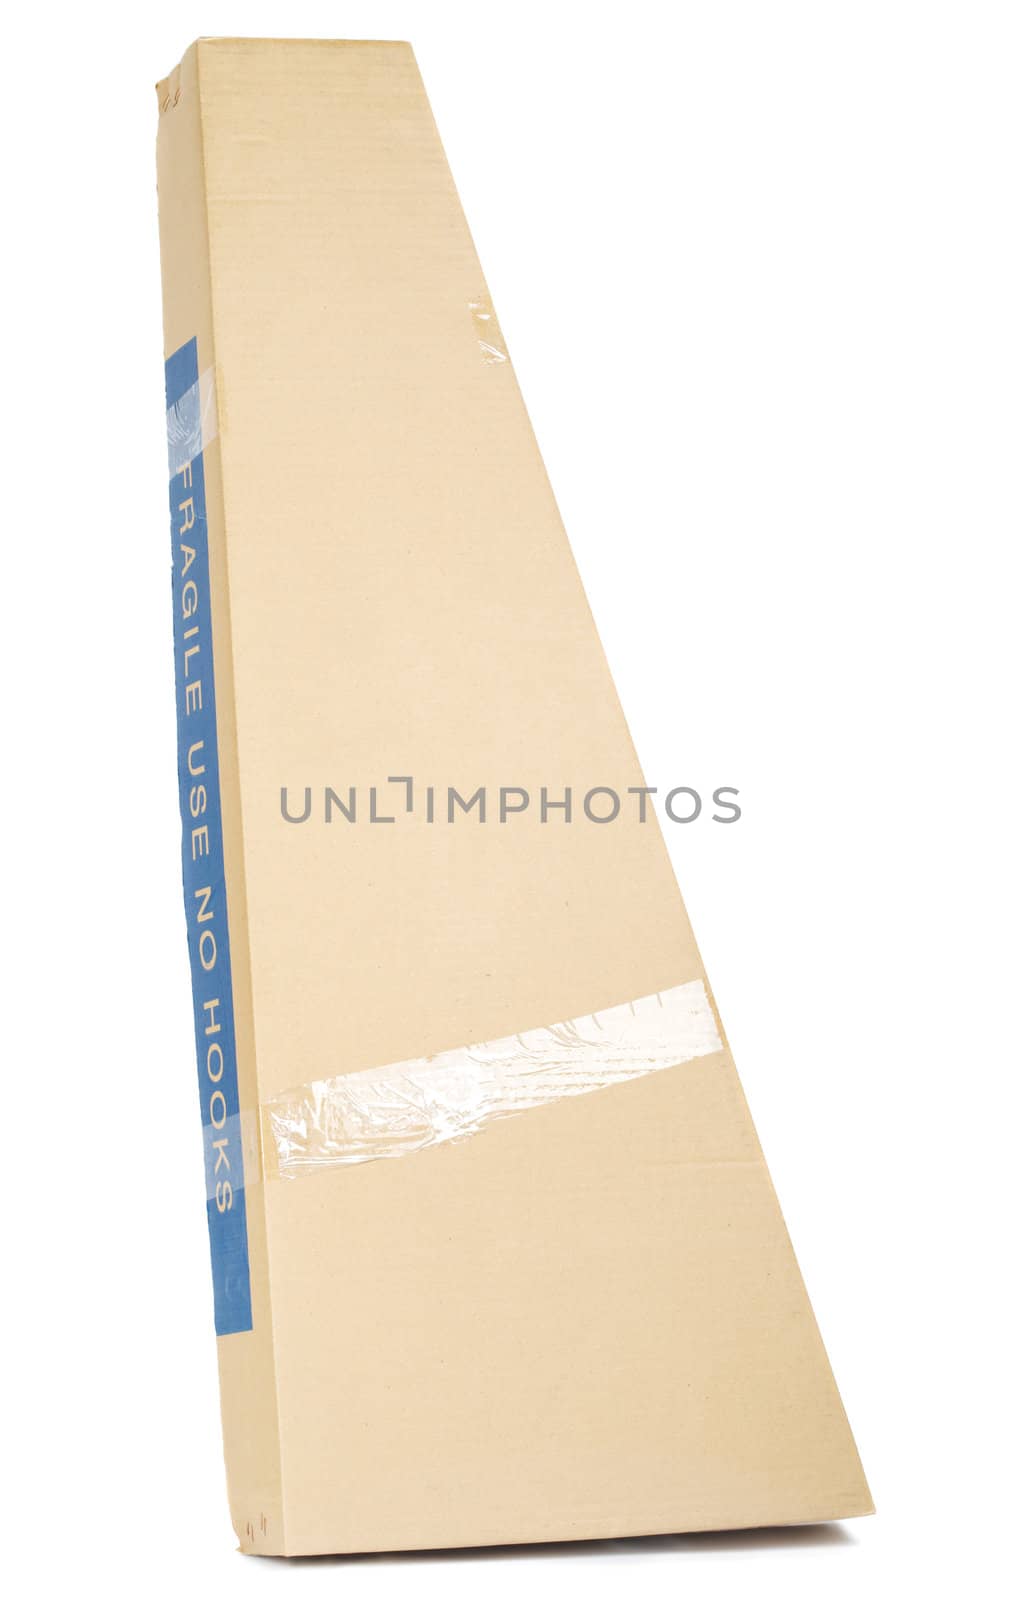 closed triangular cardboard box isolated on white